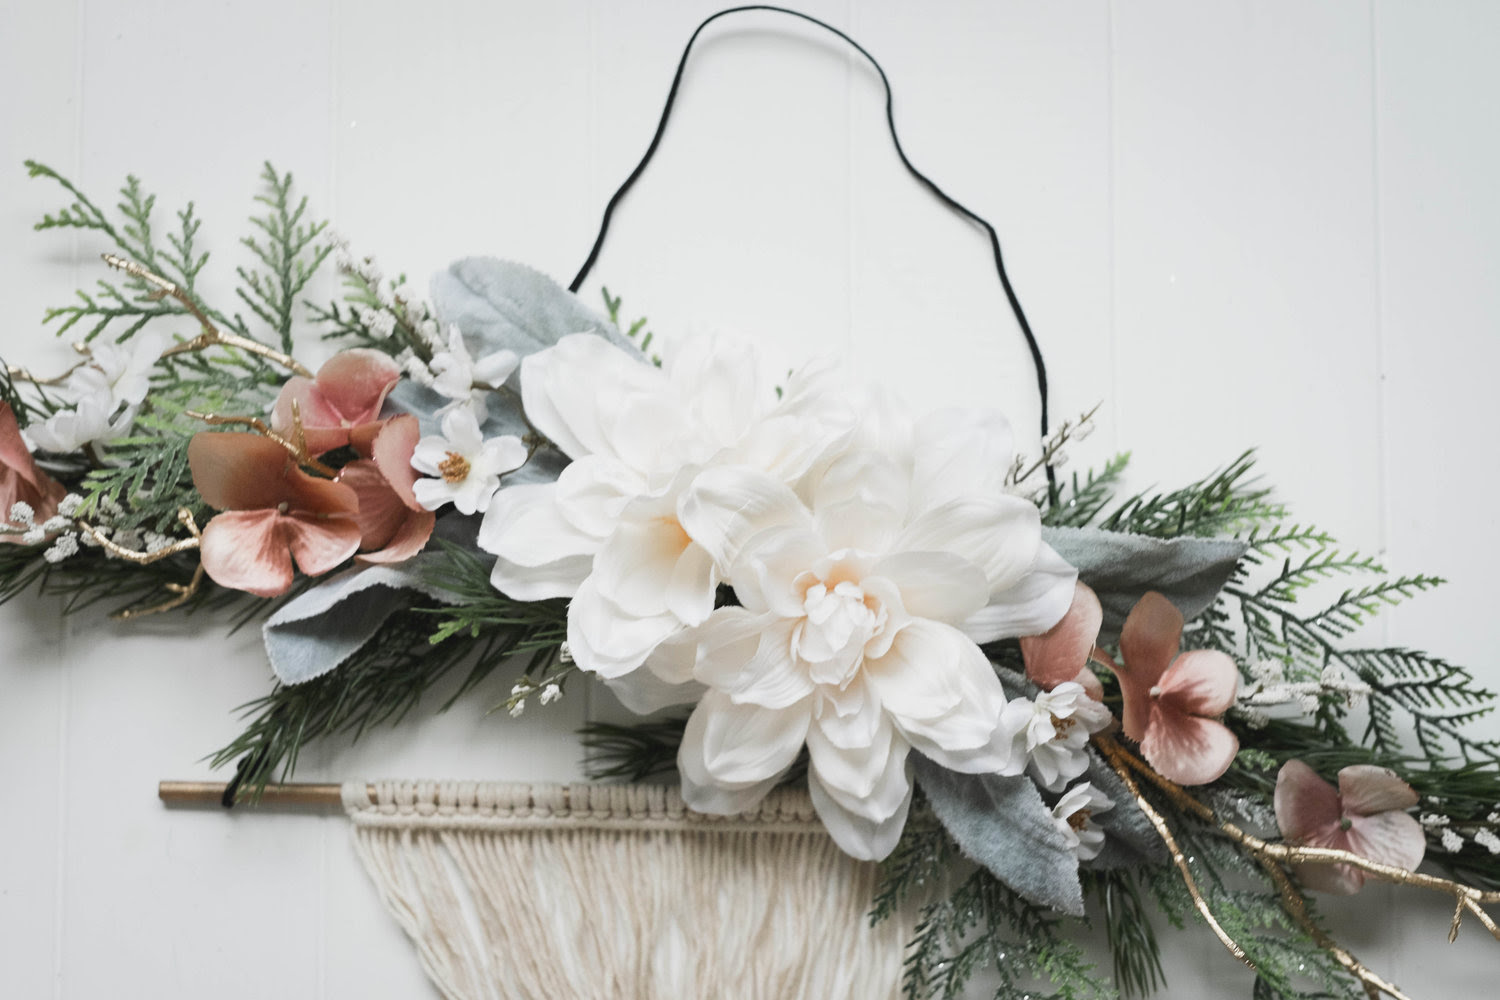 An Asymmetrical Holiday Wreath DIY + Giveaway!